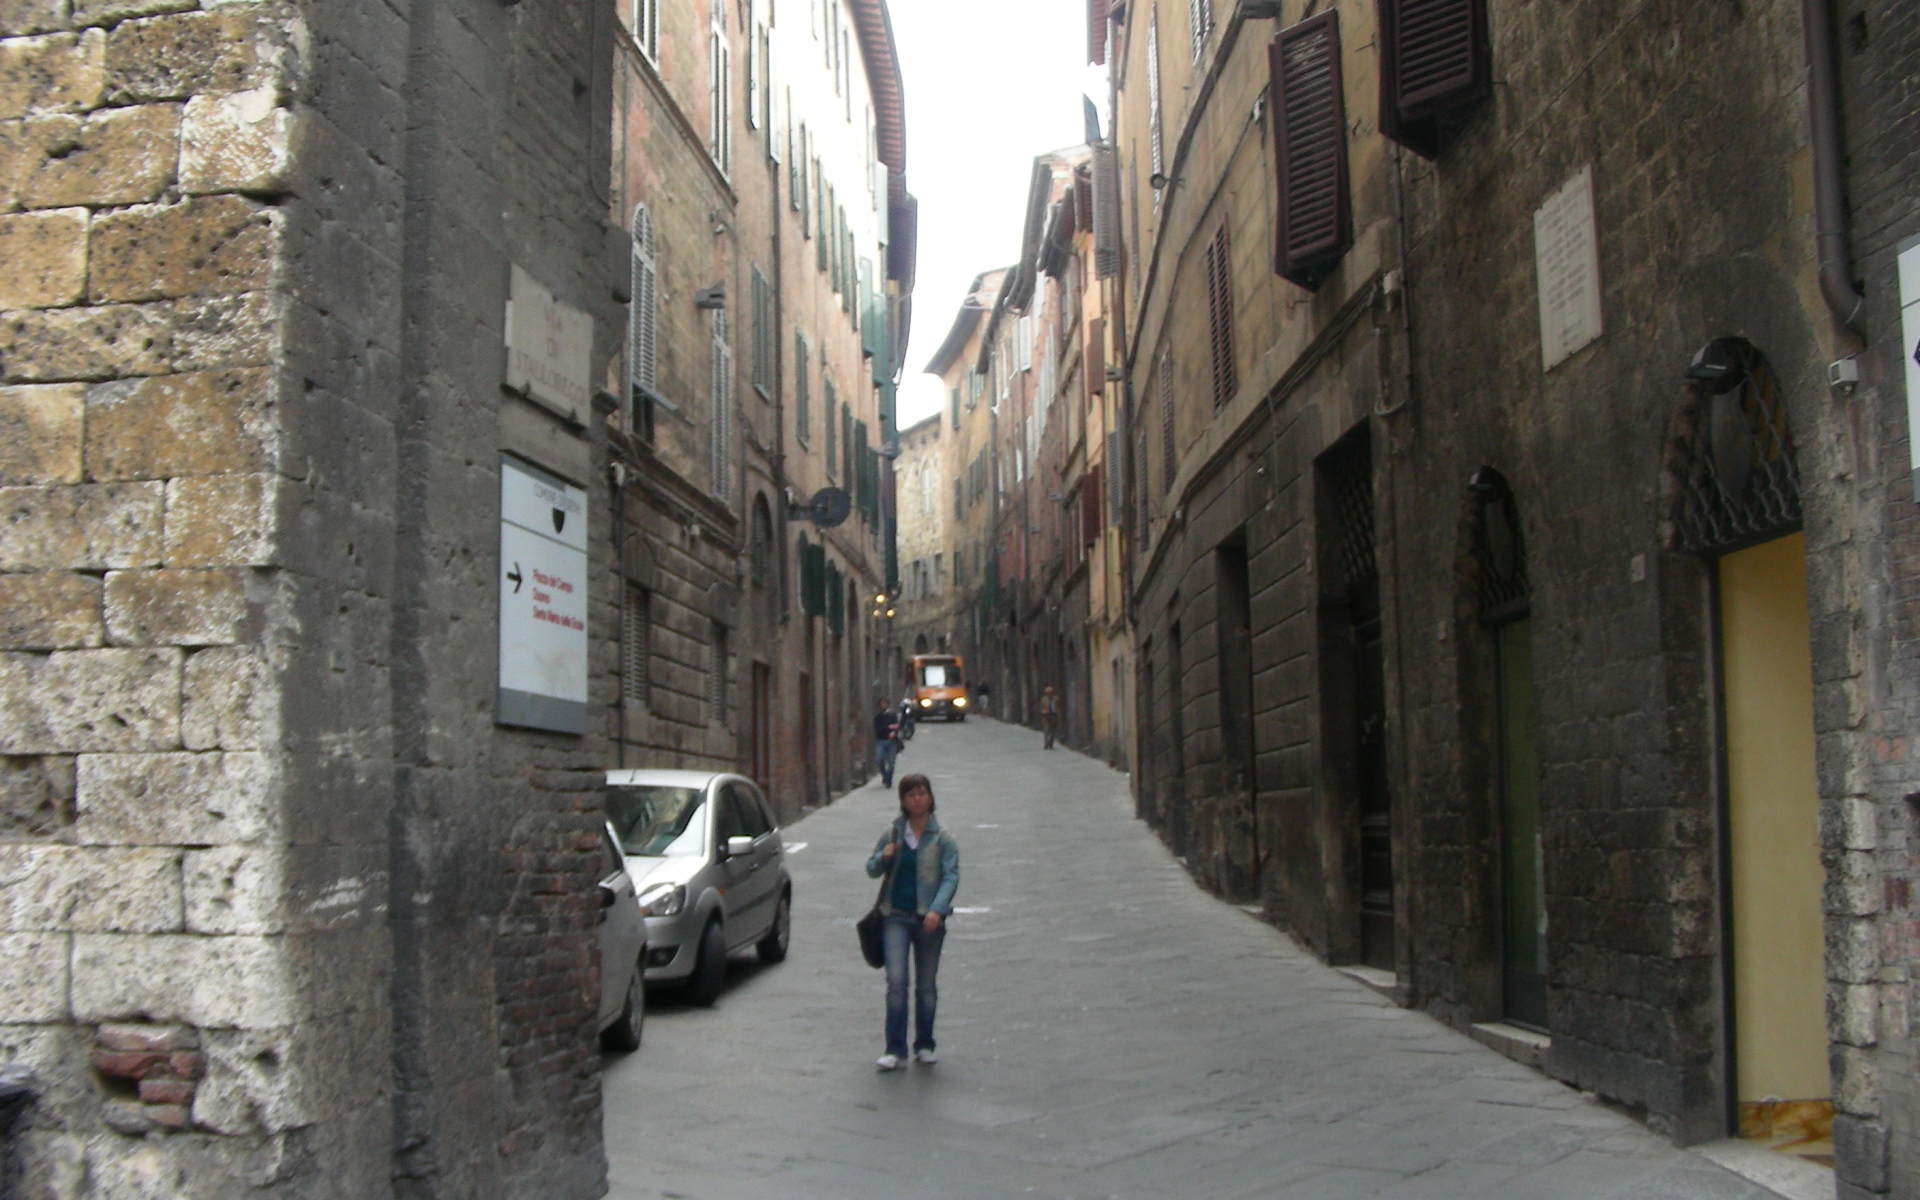 Прогулка по узким улочкам в Сиене, Италия